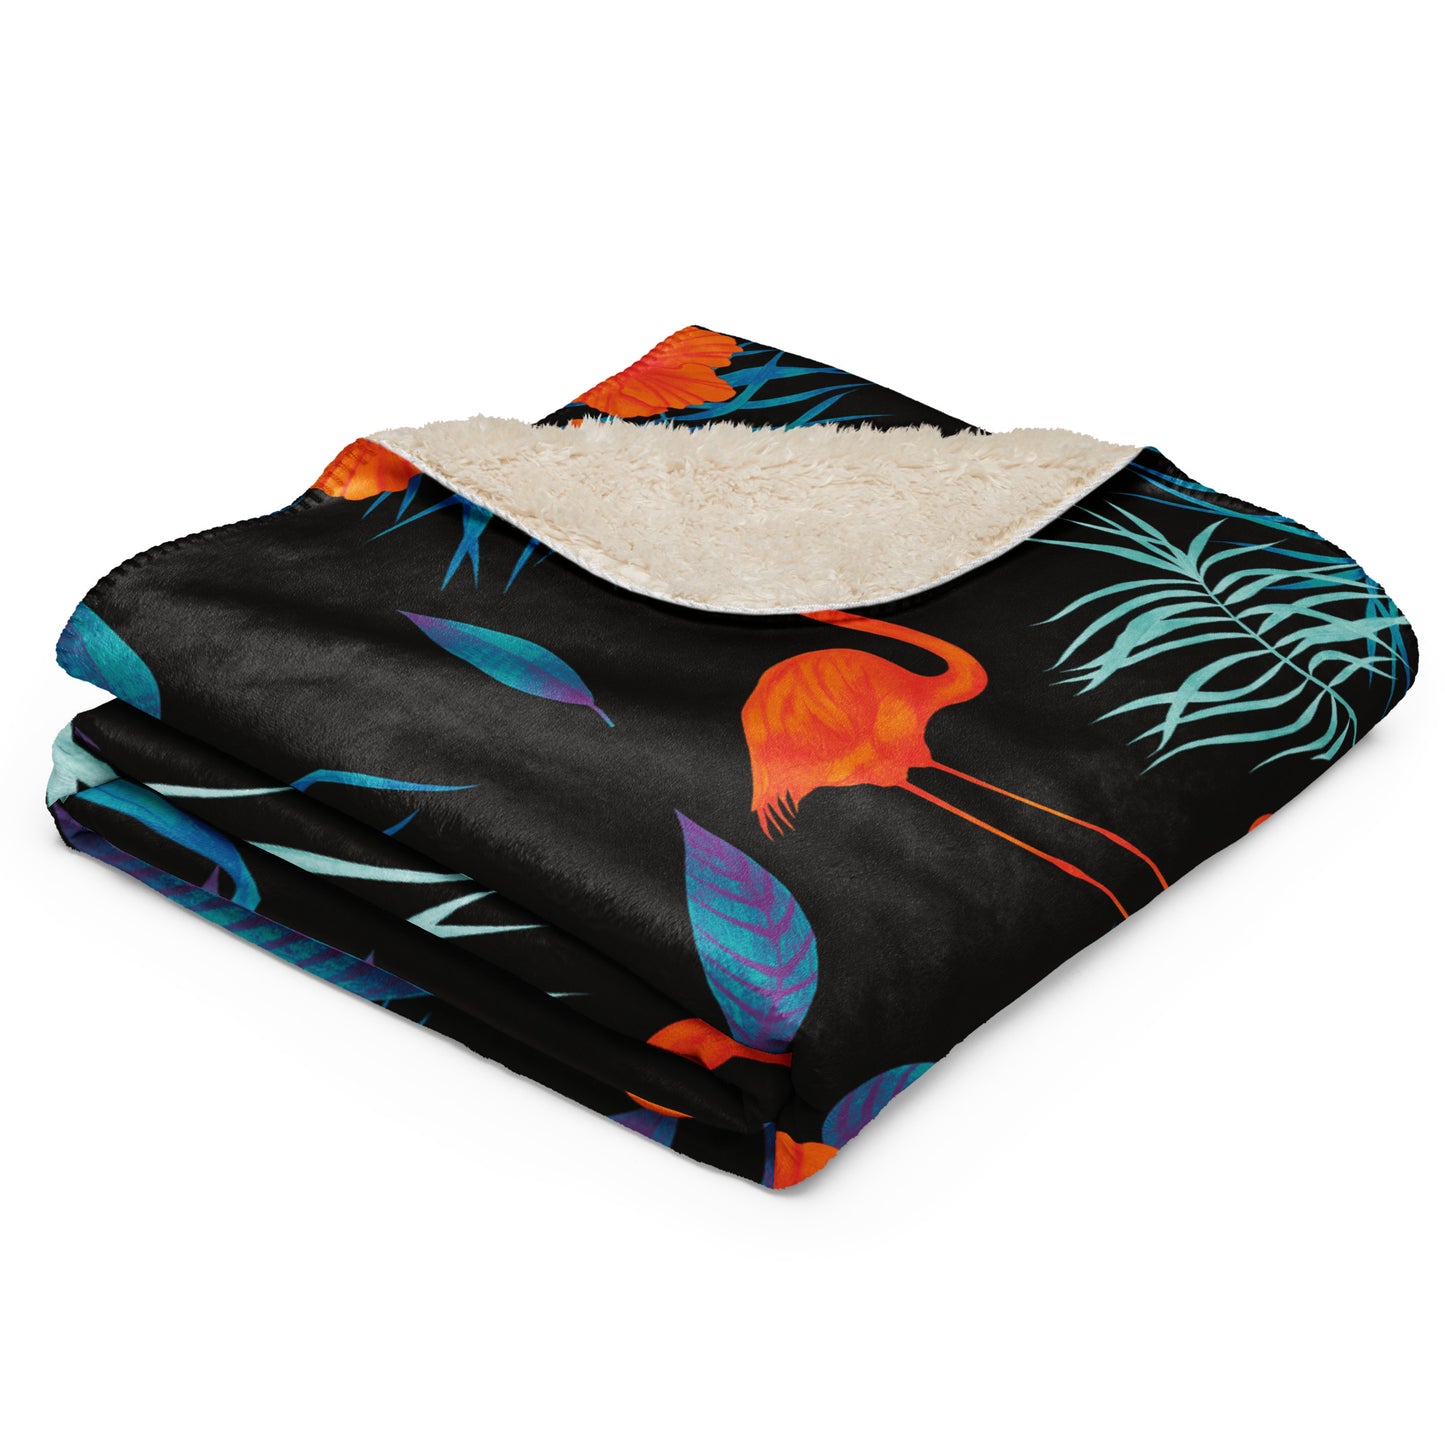 Flamingo blanket